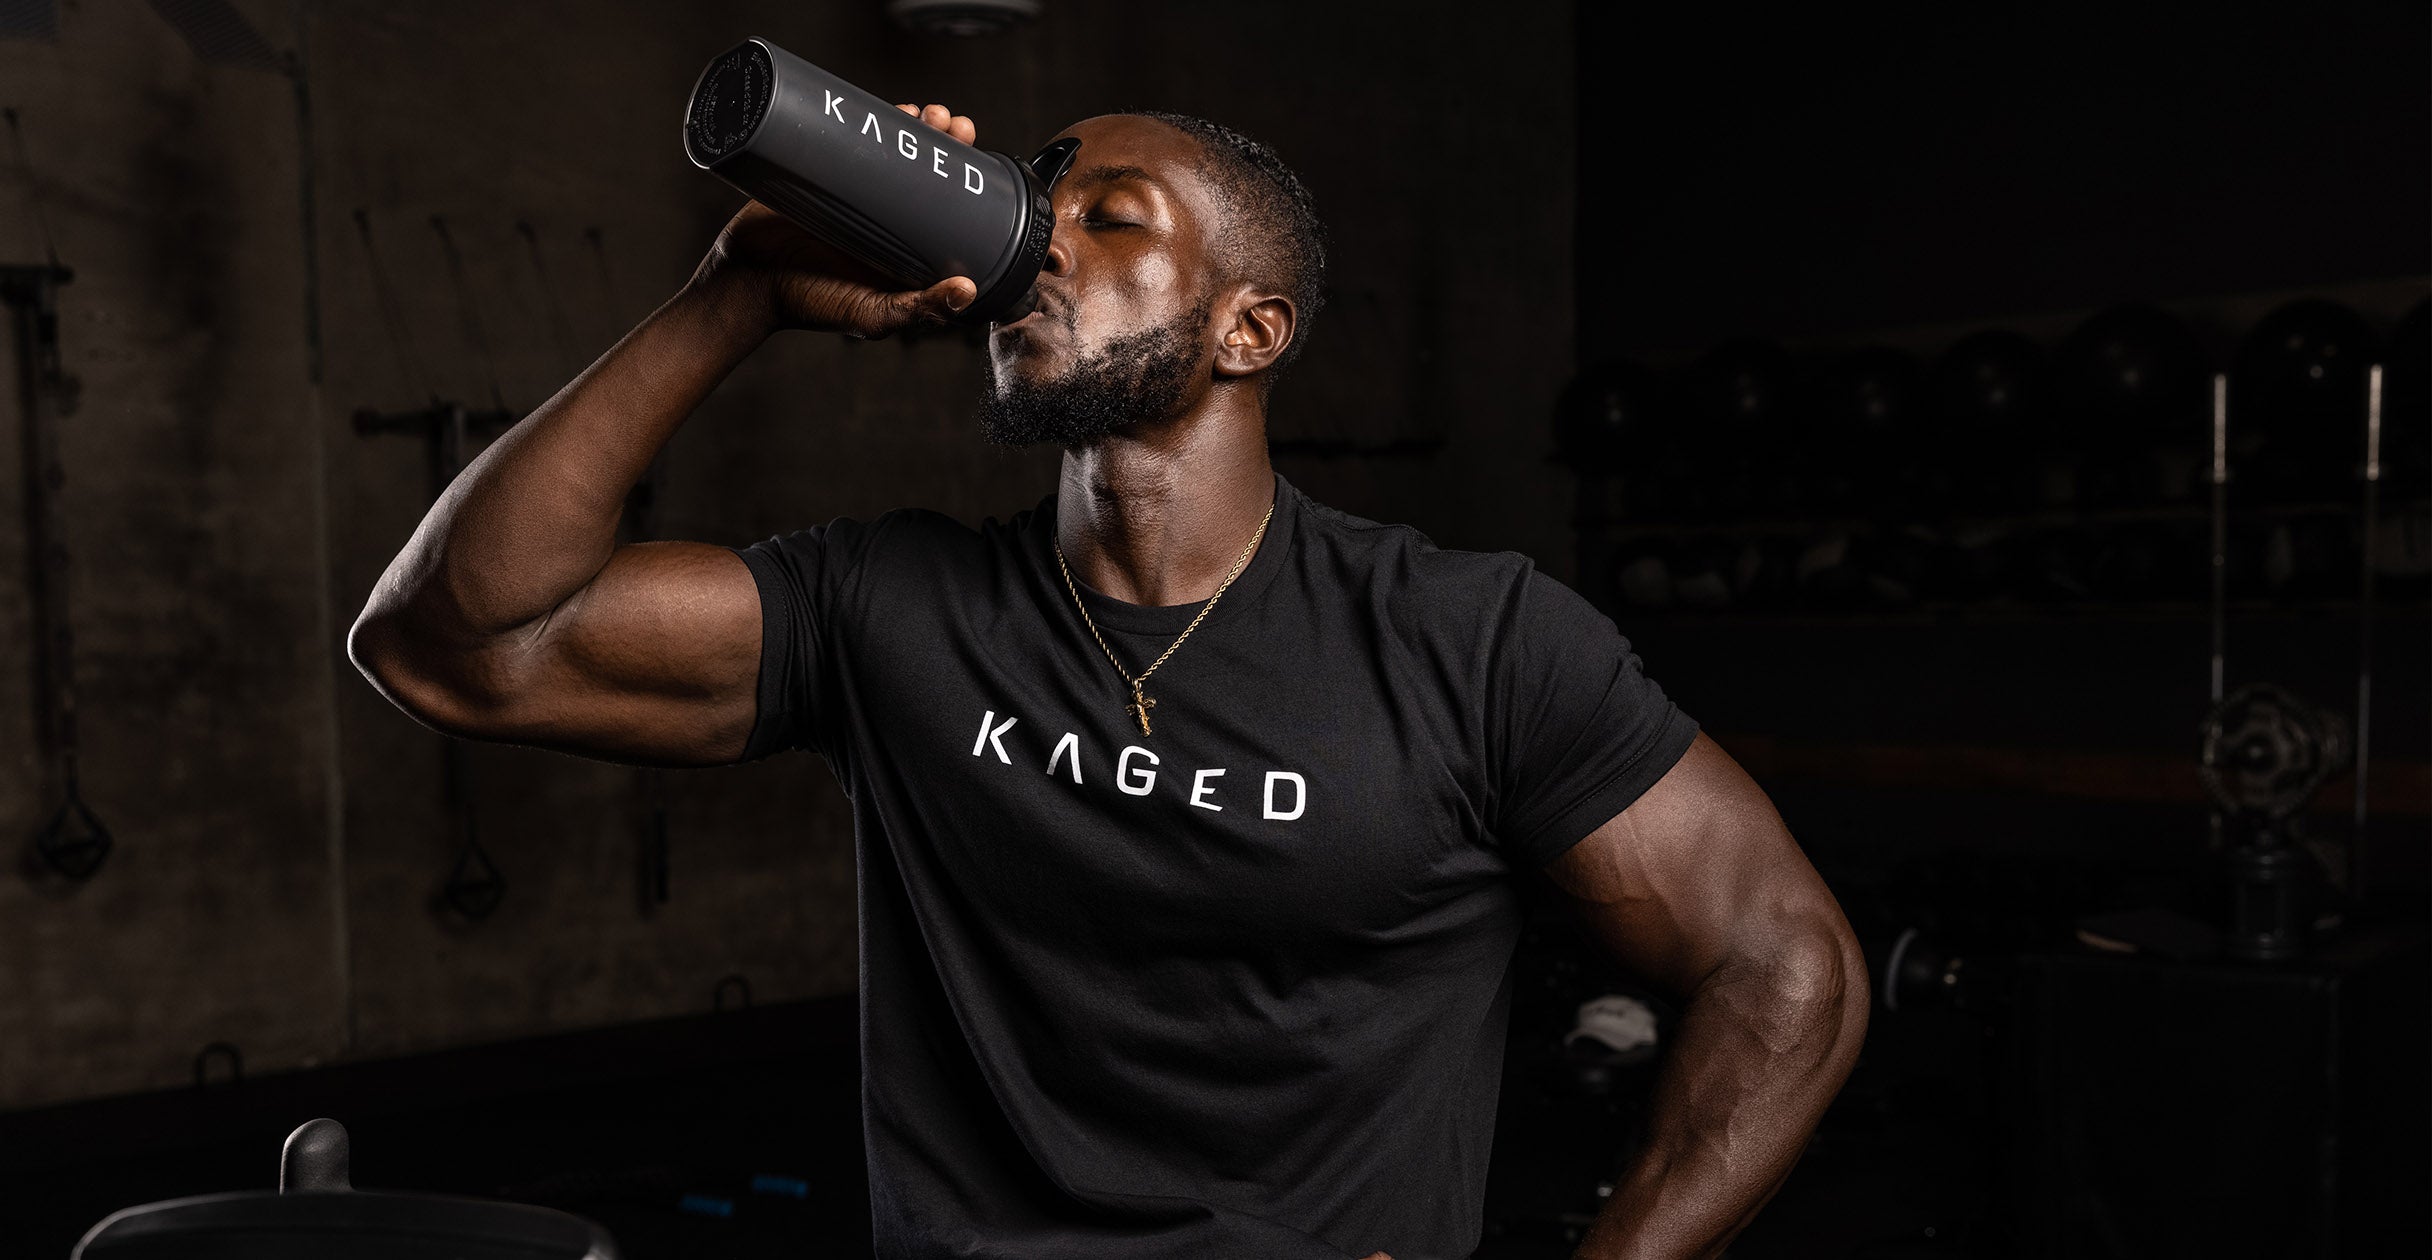 Make Kaged athlete drinking from bottle